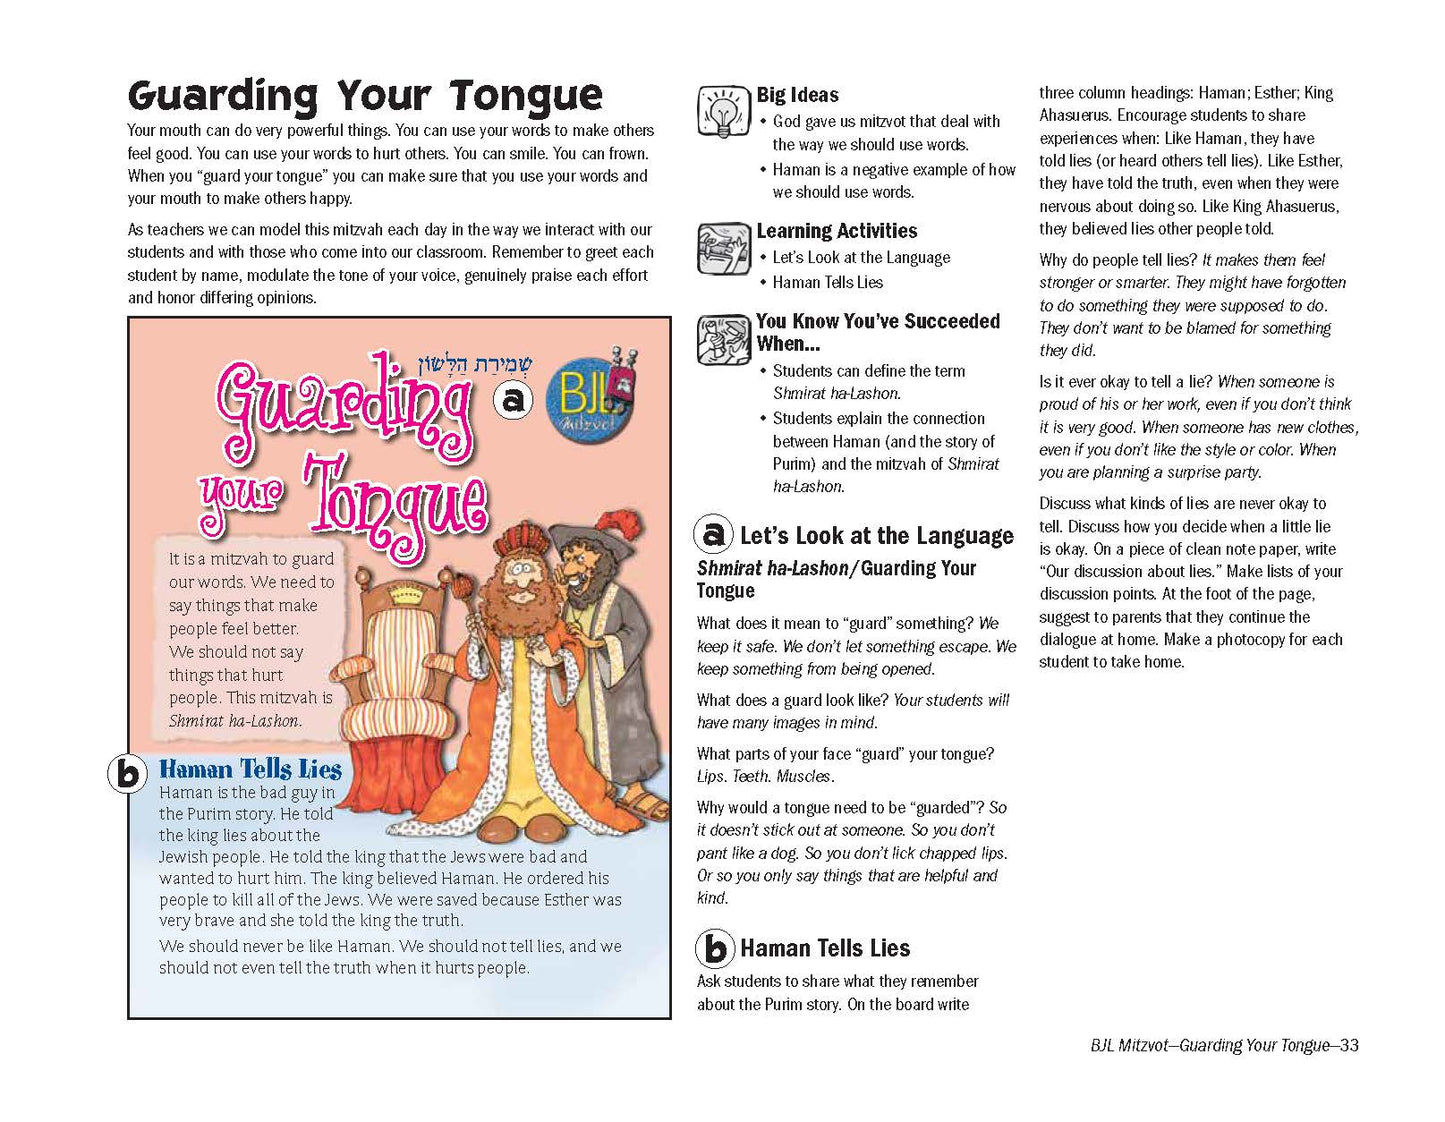 BJL Mitzvot: Guarding your Tongue